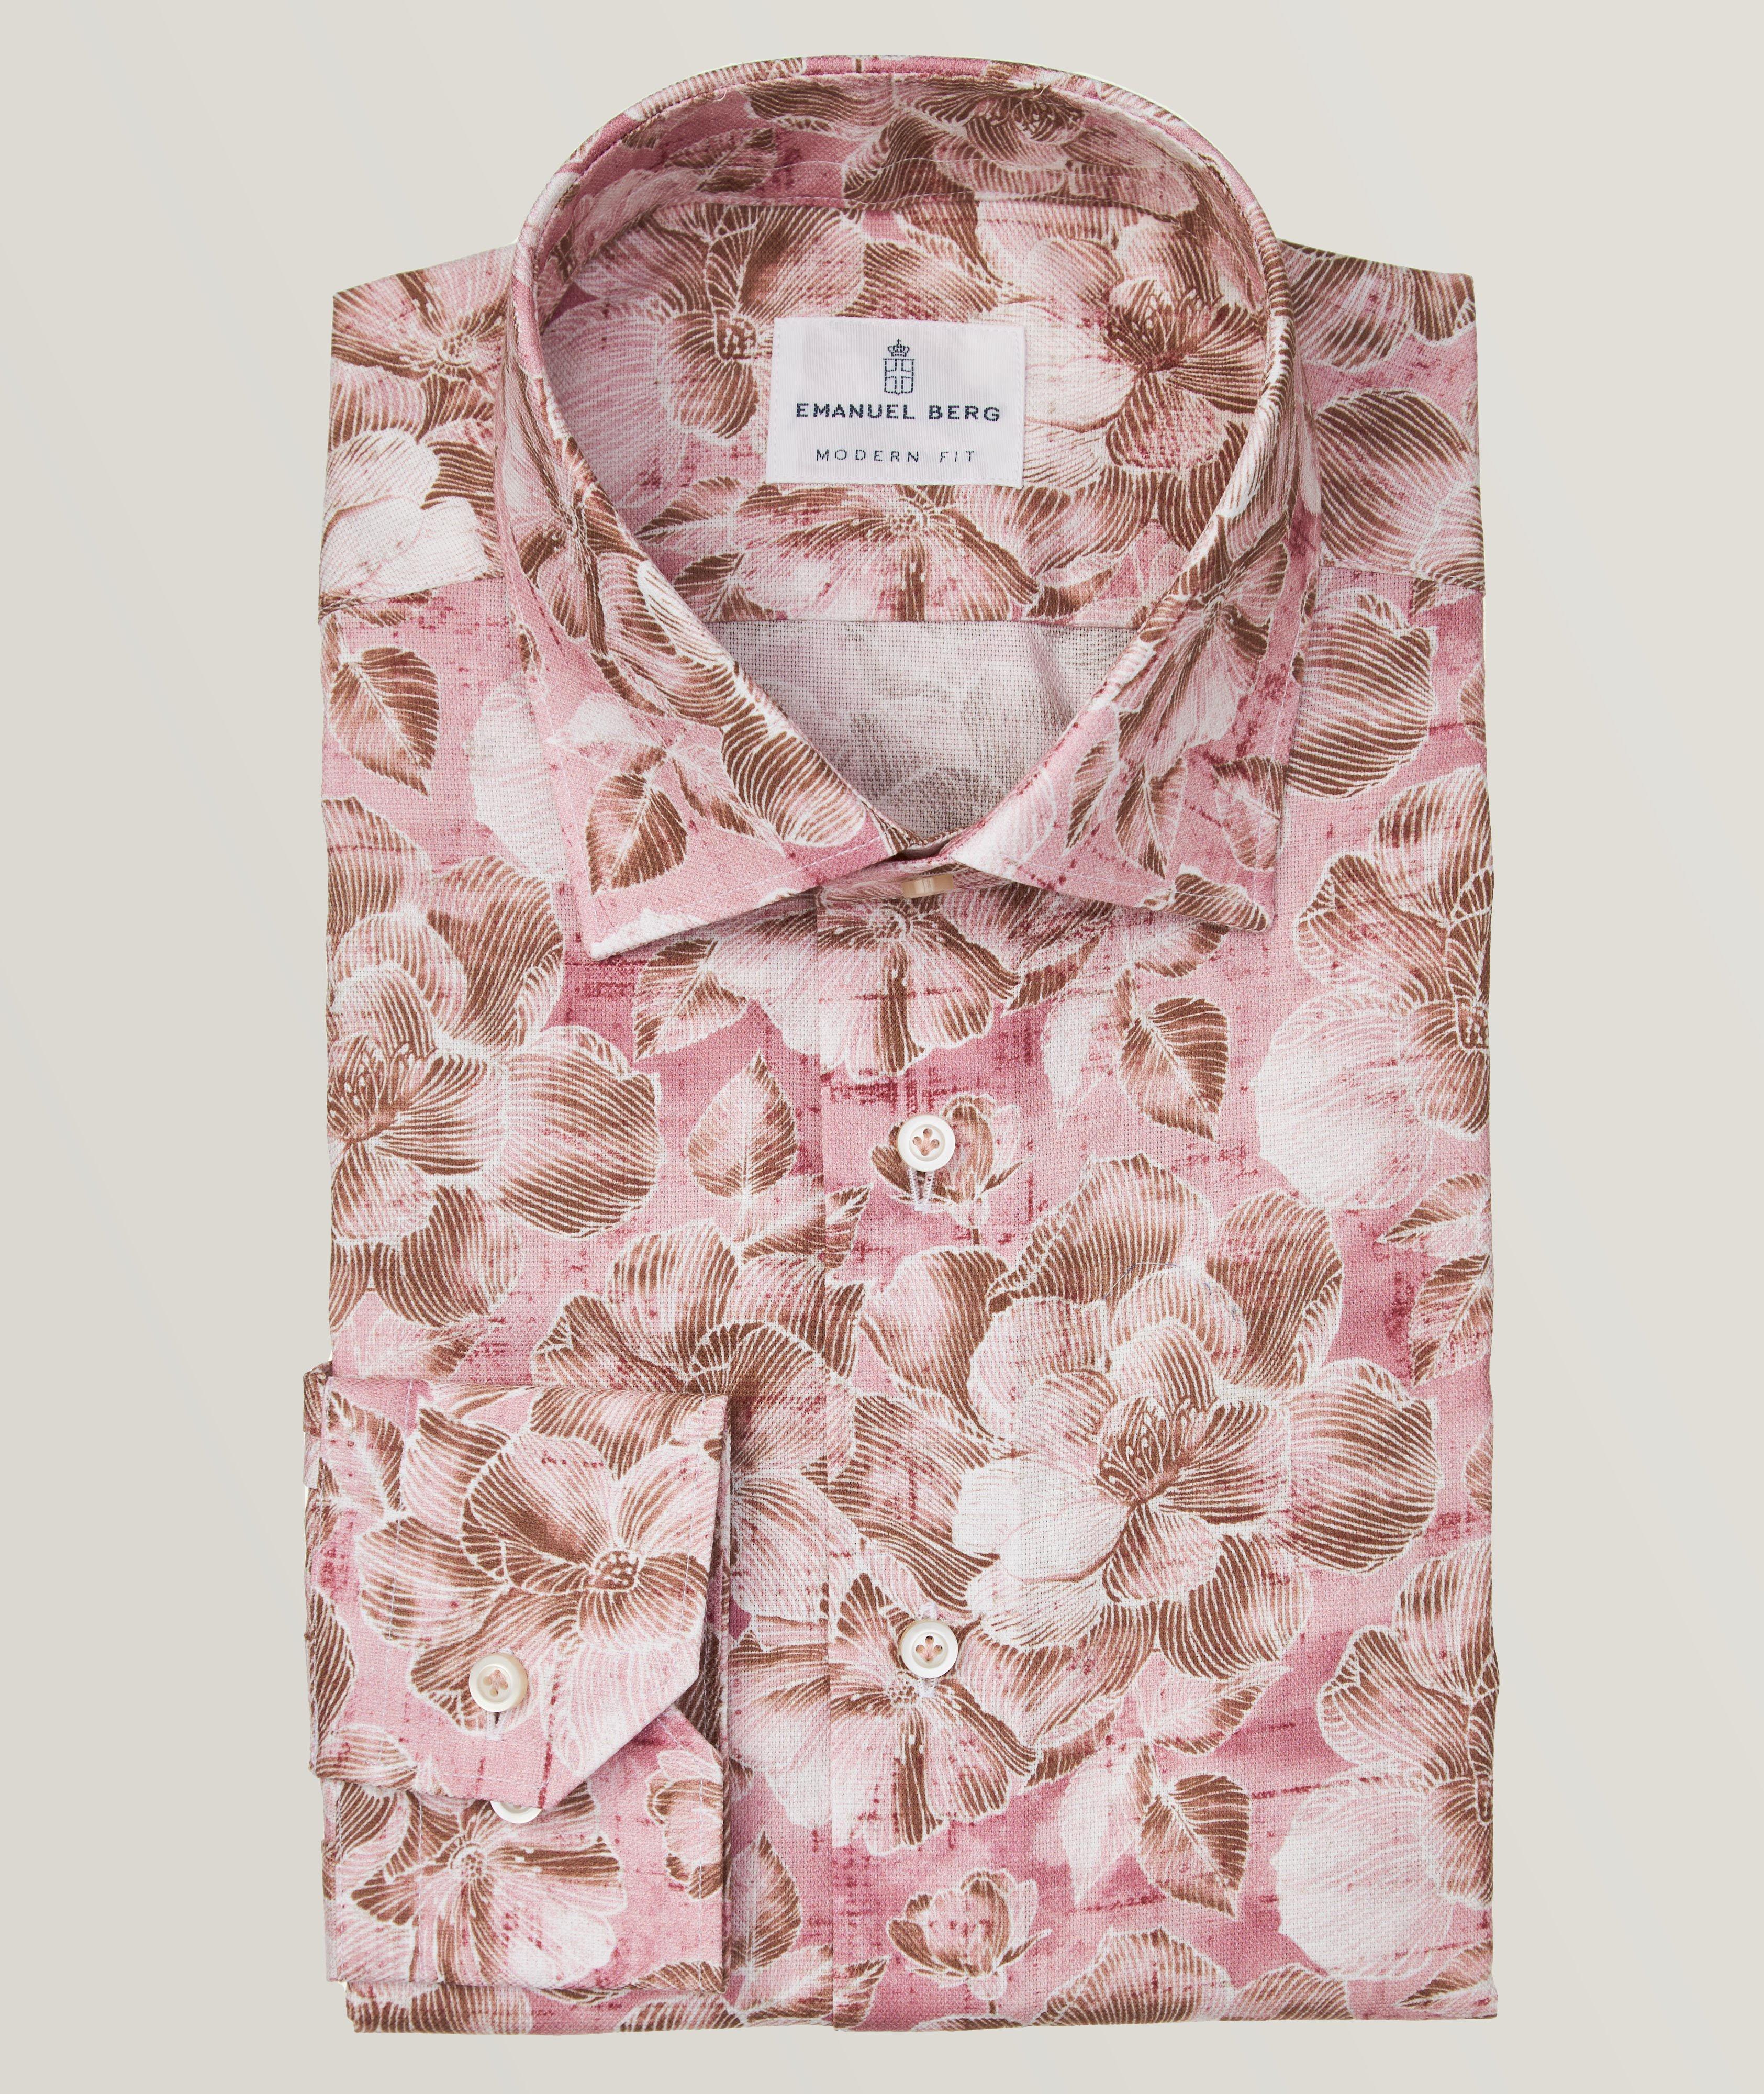 Emanuel Berg Floral Print Cotton Luxury Sport Shirt